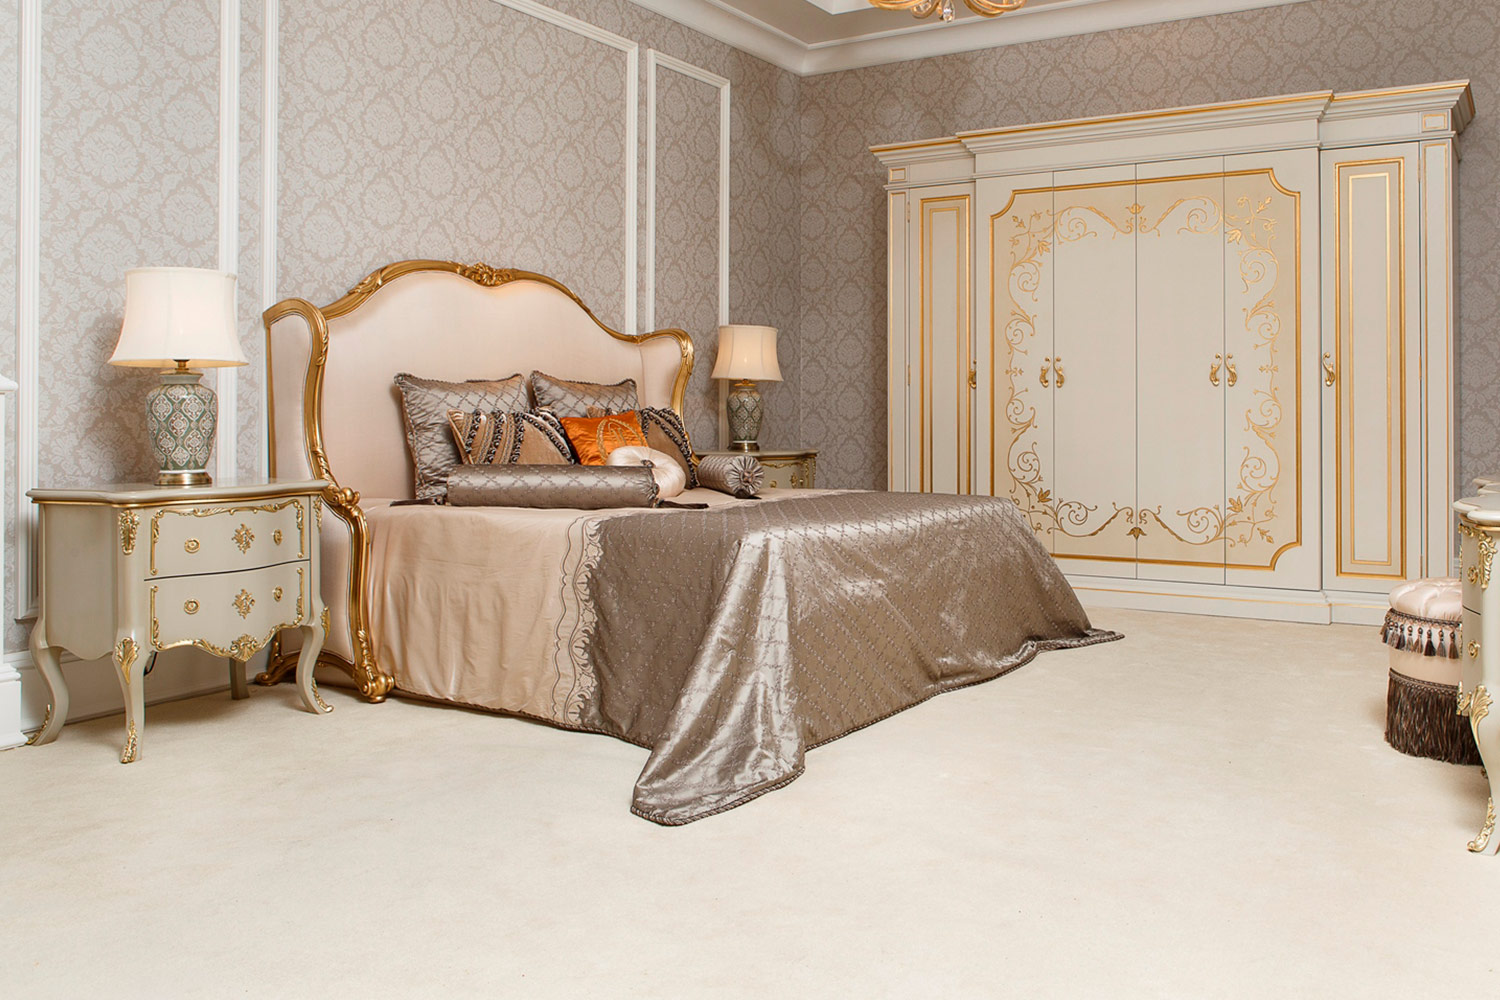 Mirage Furniture - Braga Bedroom